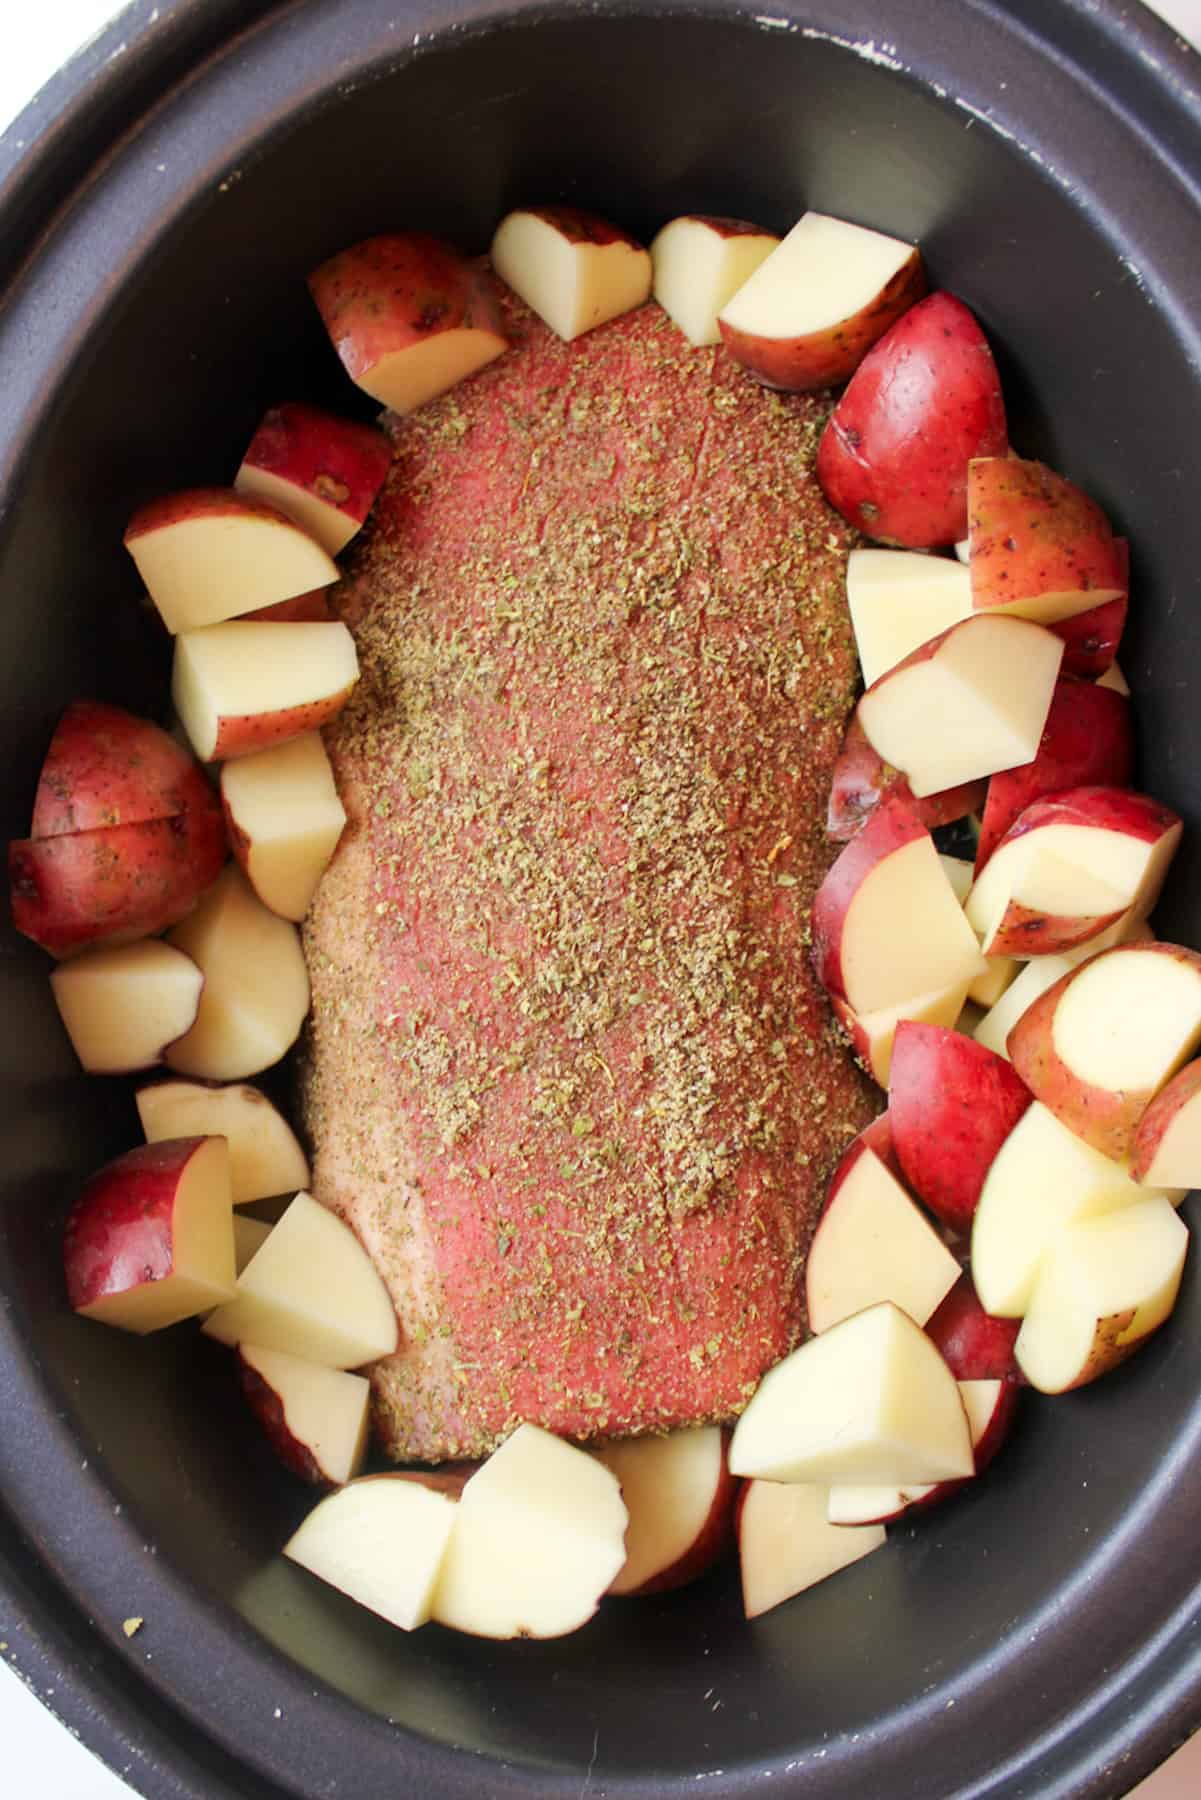 chopped red potatoes and seasoned beef roast in crock pot.